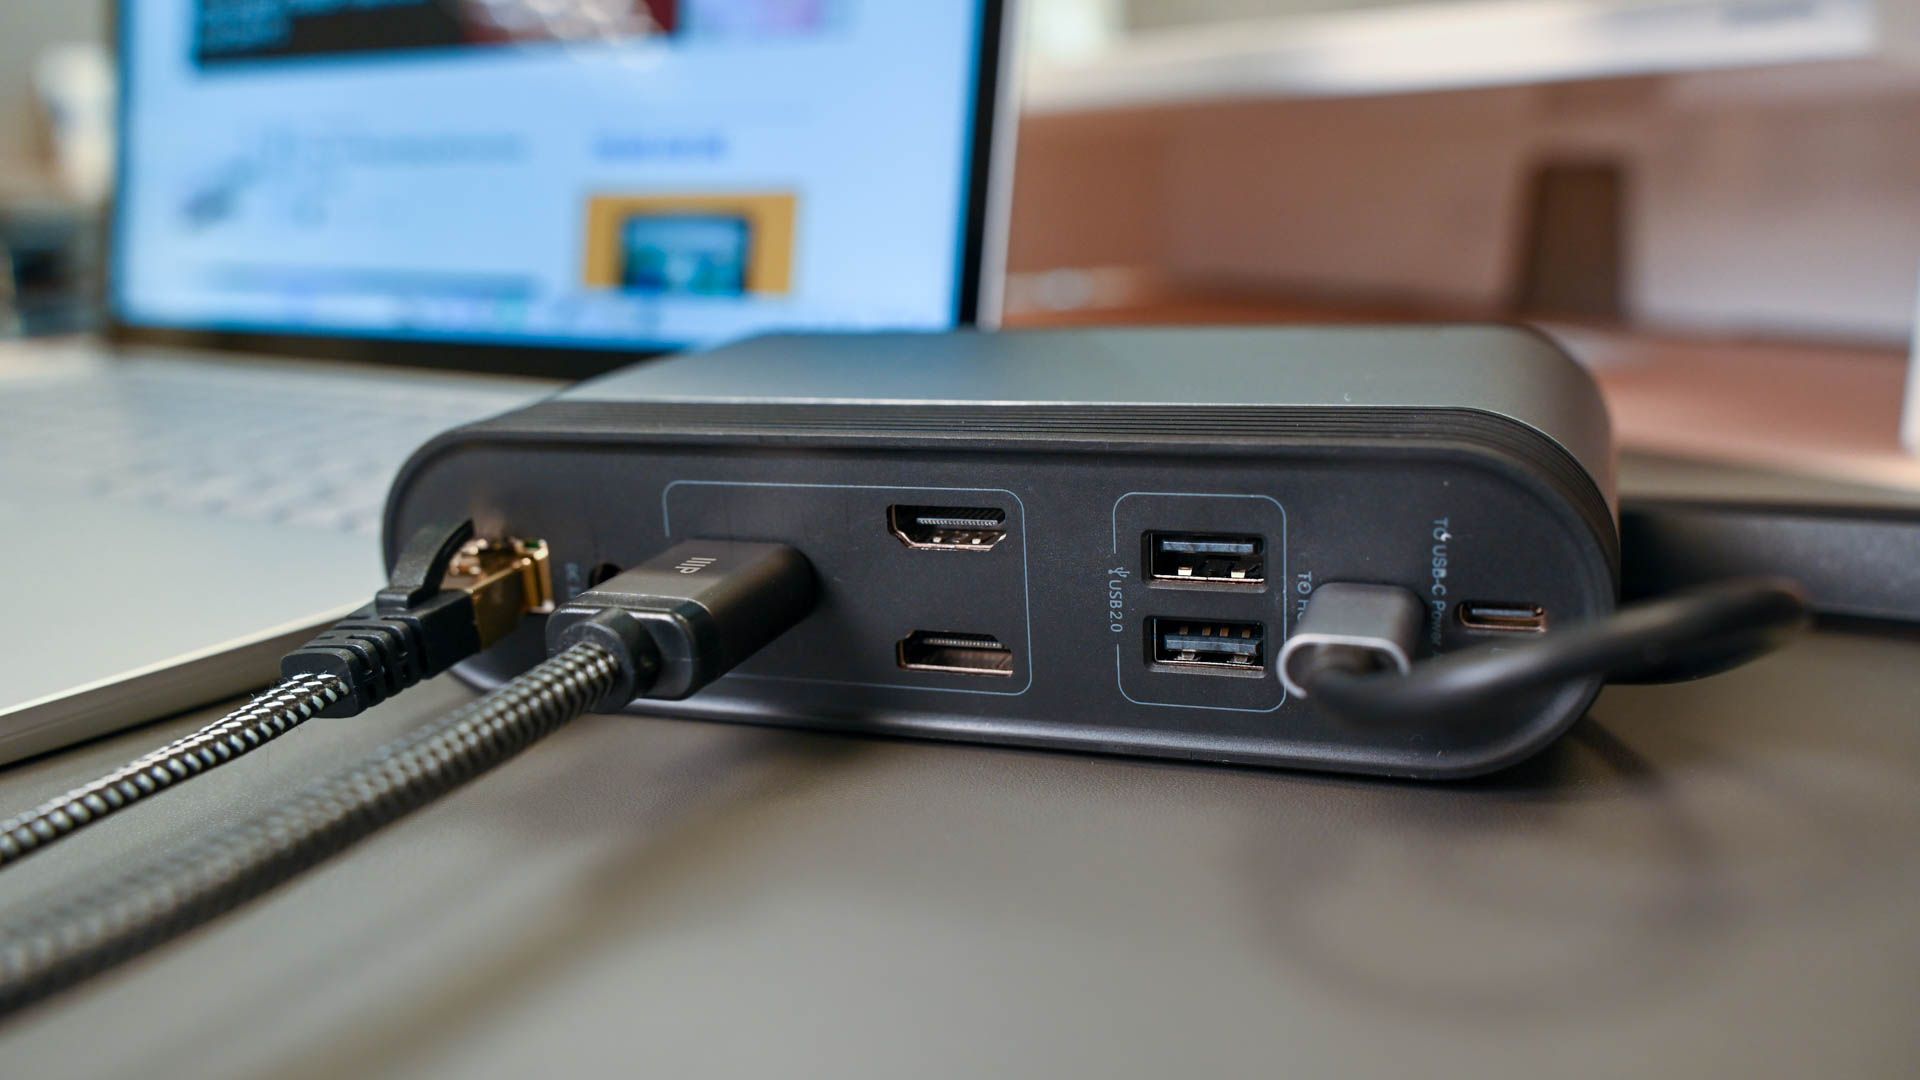 Baseus USB C Hub plugged into a laptop